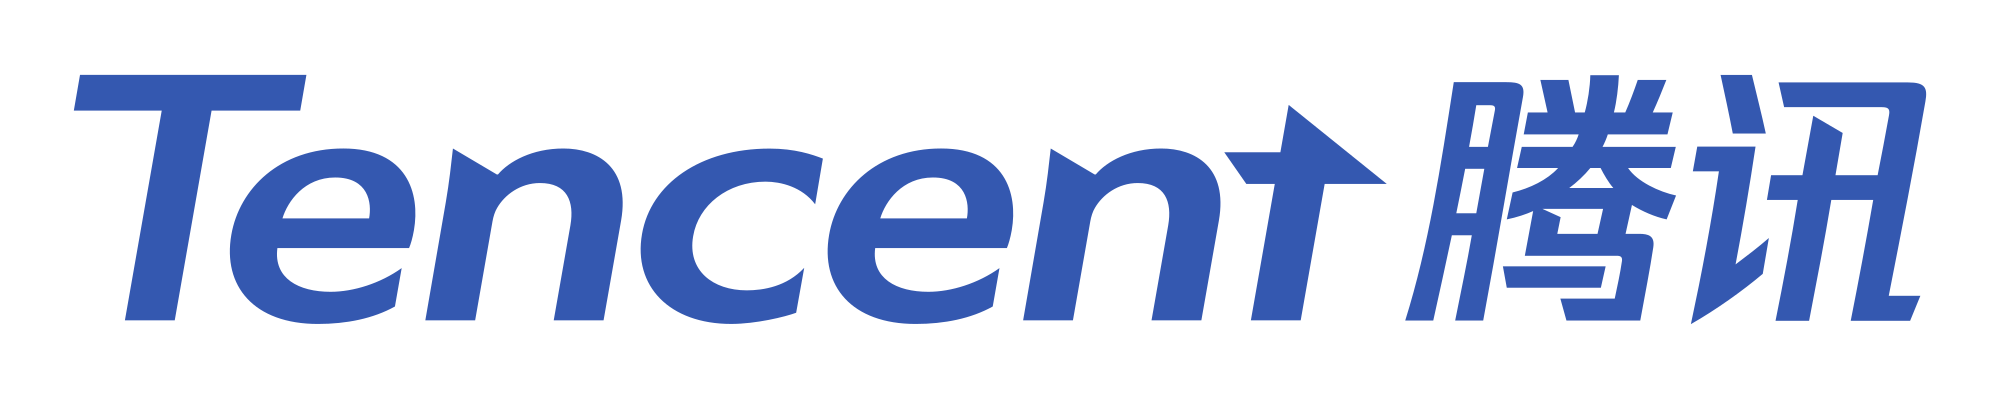 Tecent Logo - File:Tencent Logo.svg - Wikimedia Commons